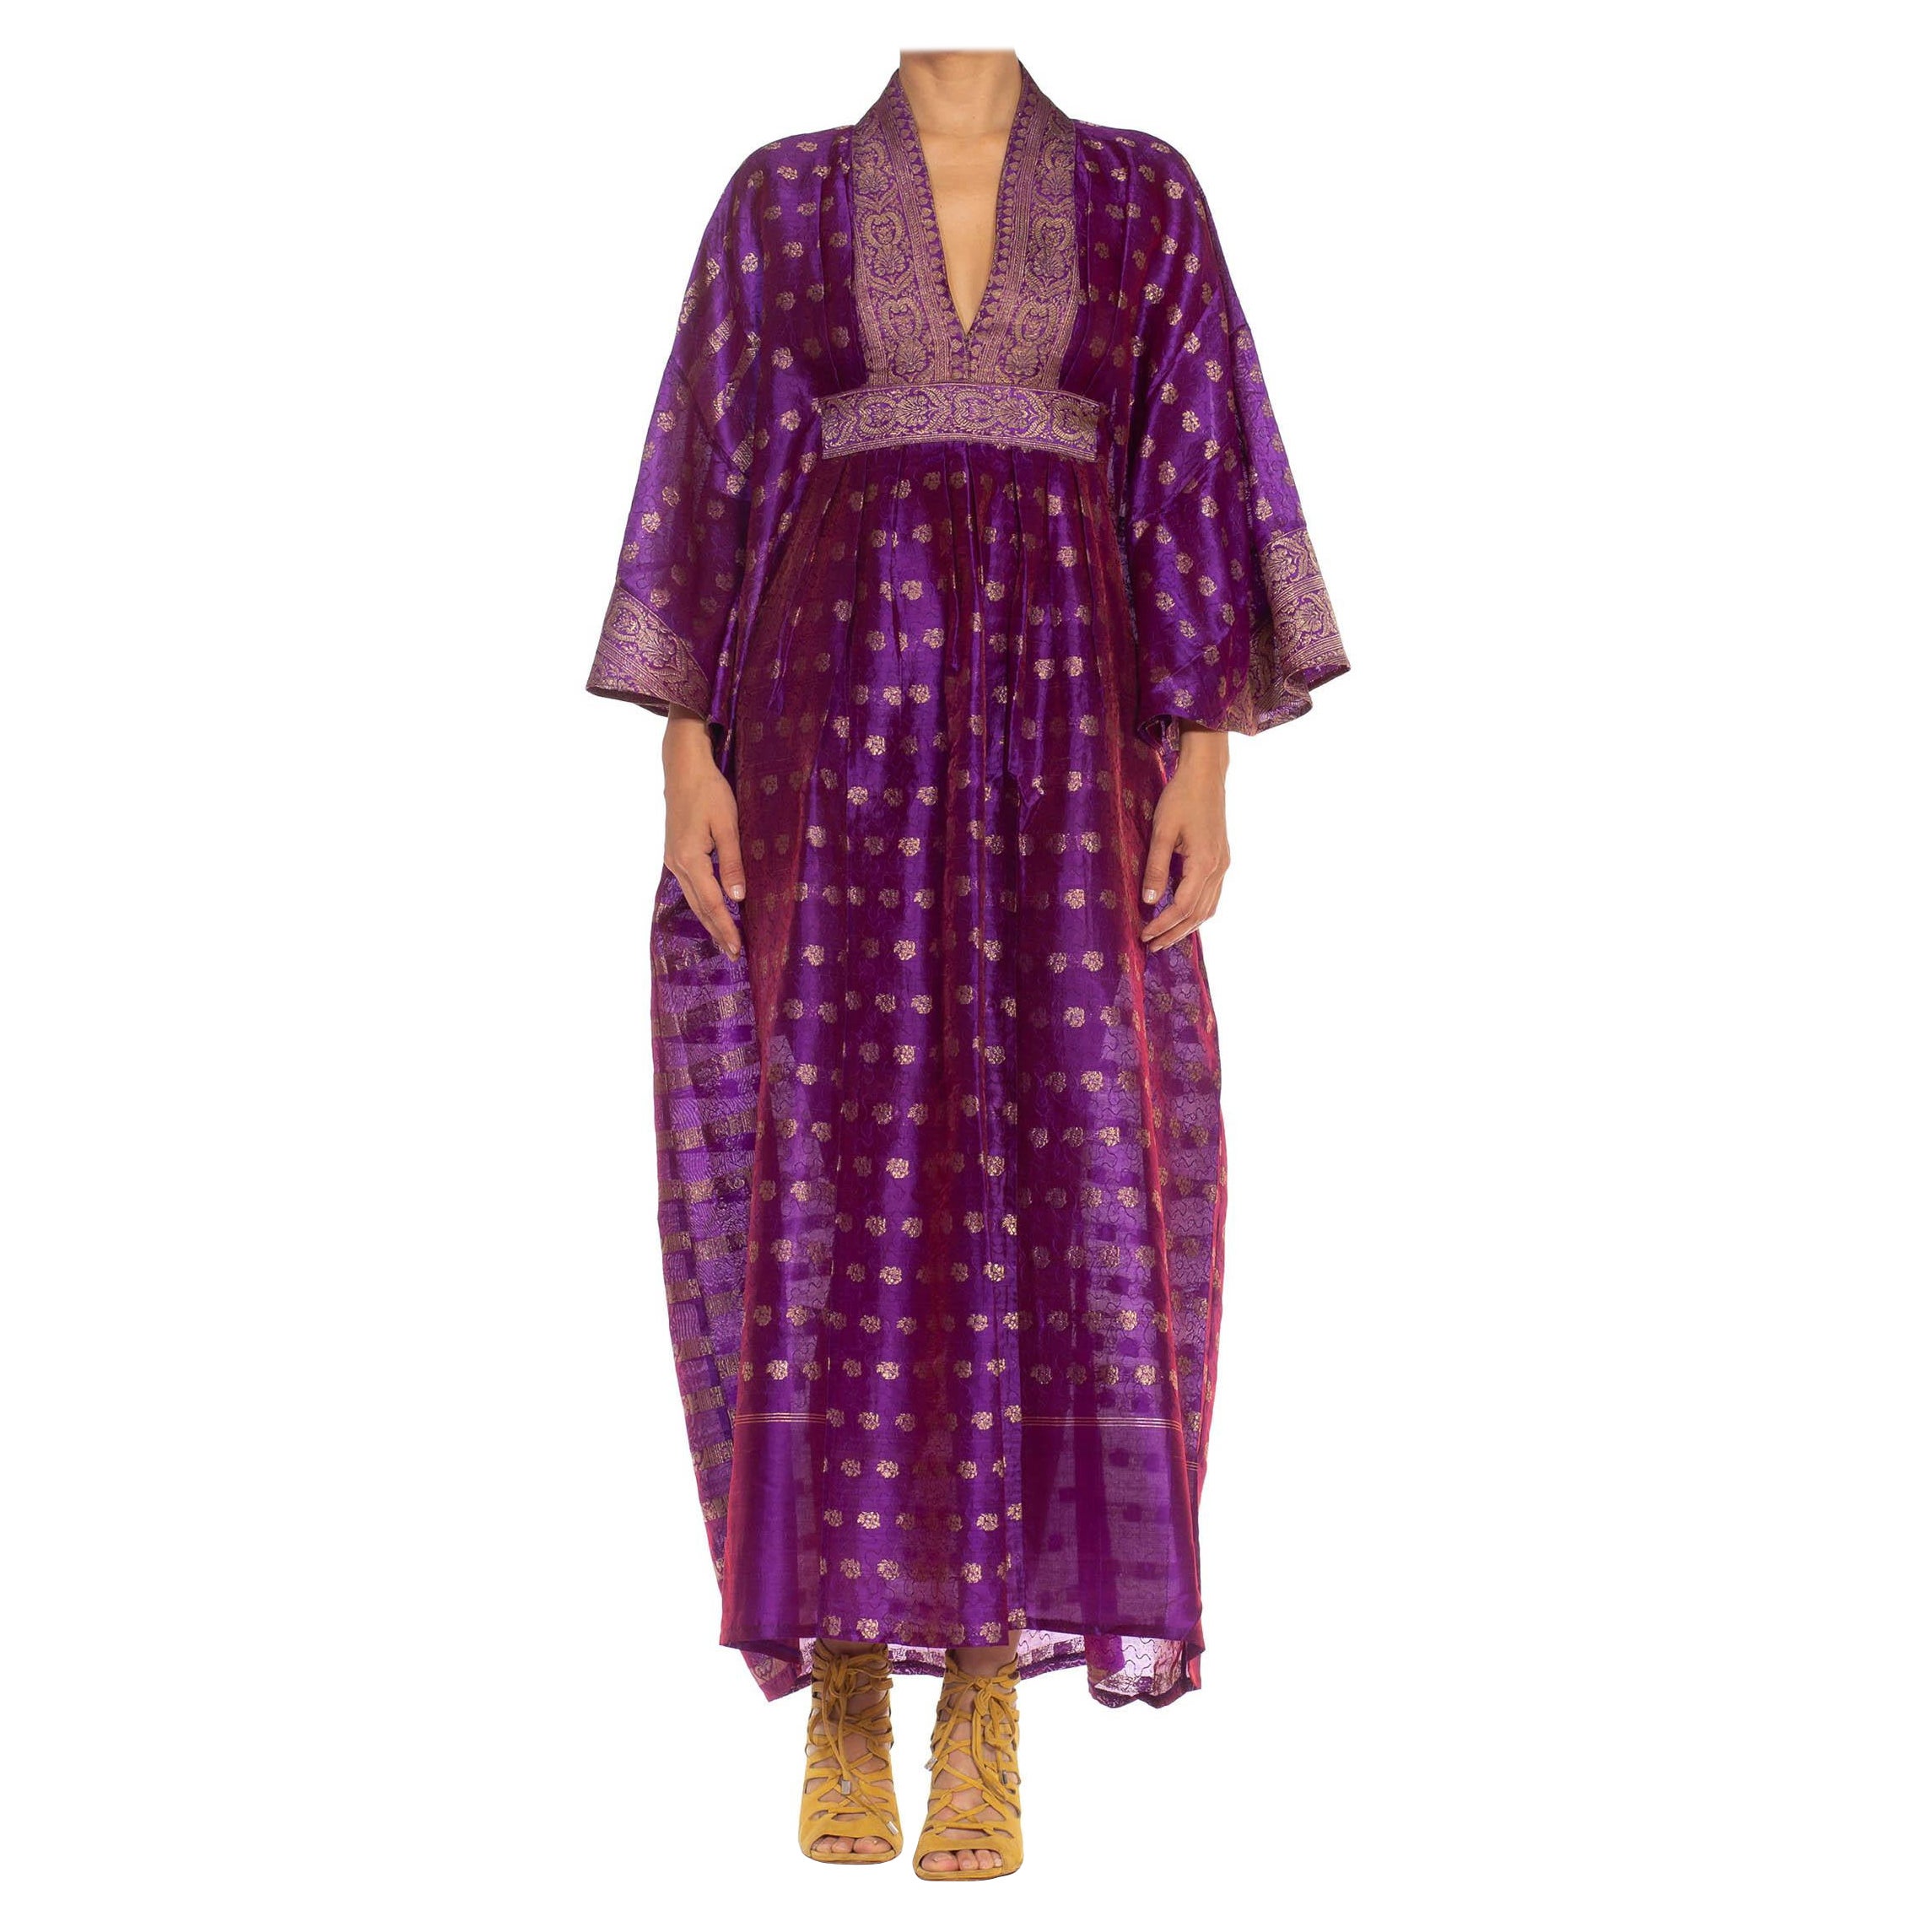 MORPHEW COLLECTION Purple & Gold Silk Kaftan Made From Vintage Saris